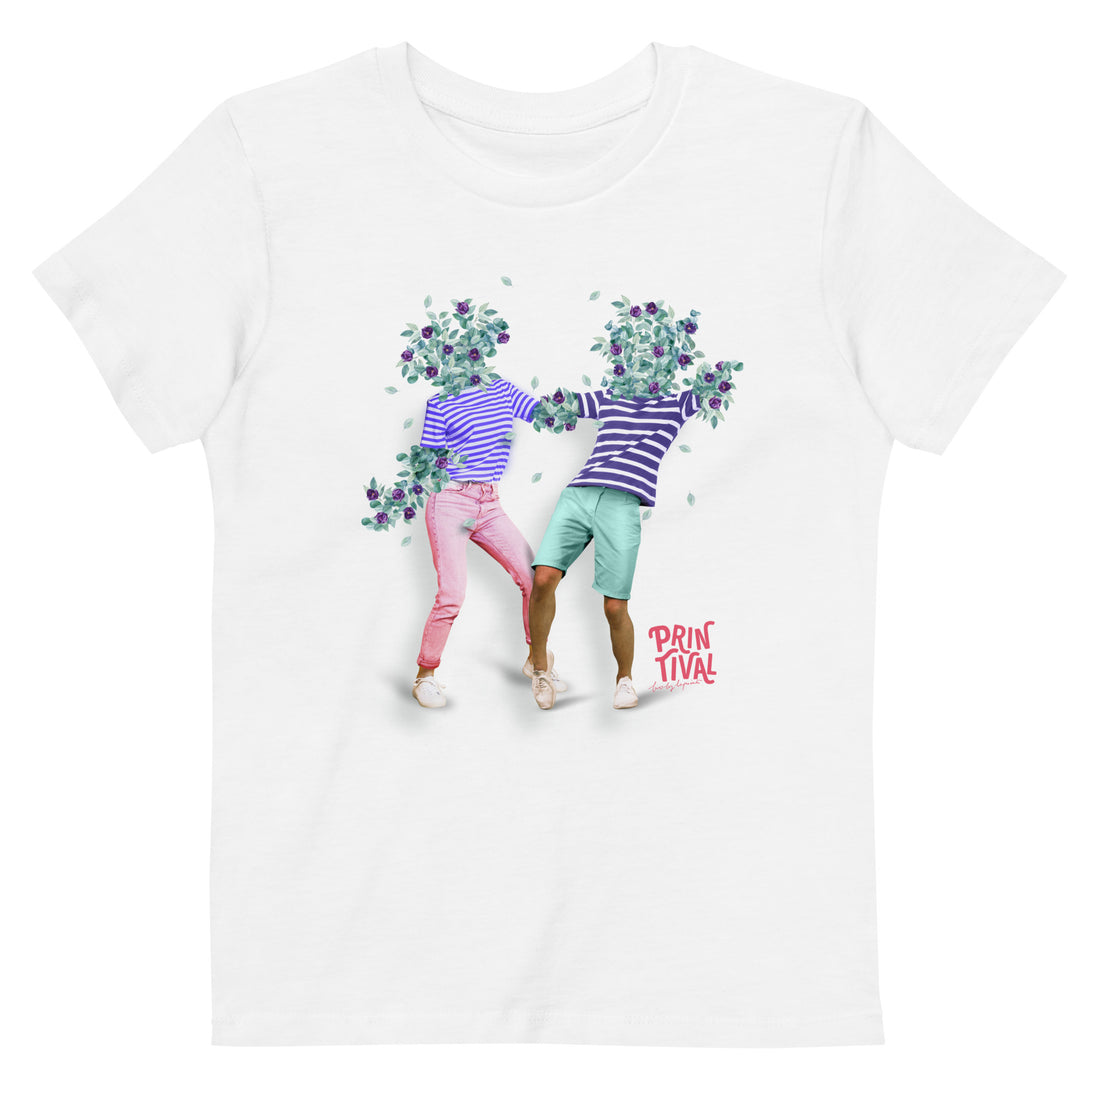 Printival 2024 - T-shirt en coton bio enfant